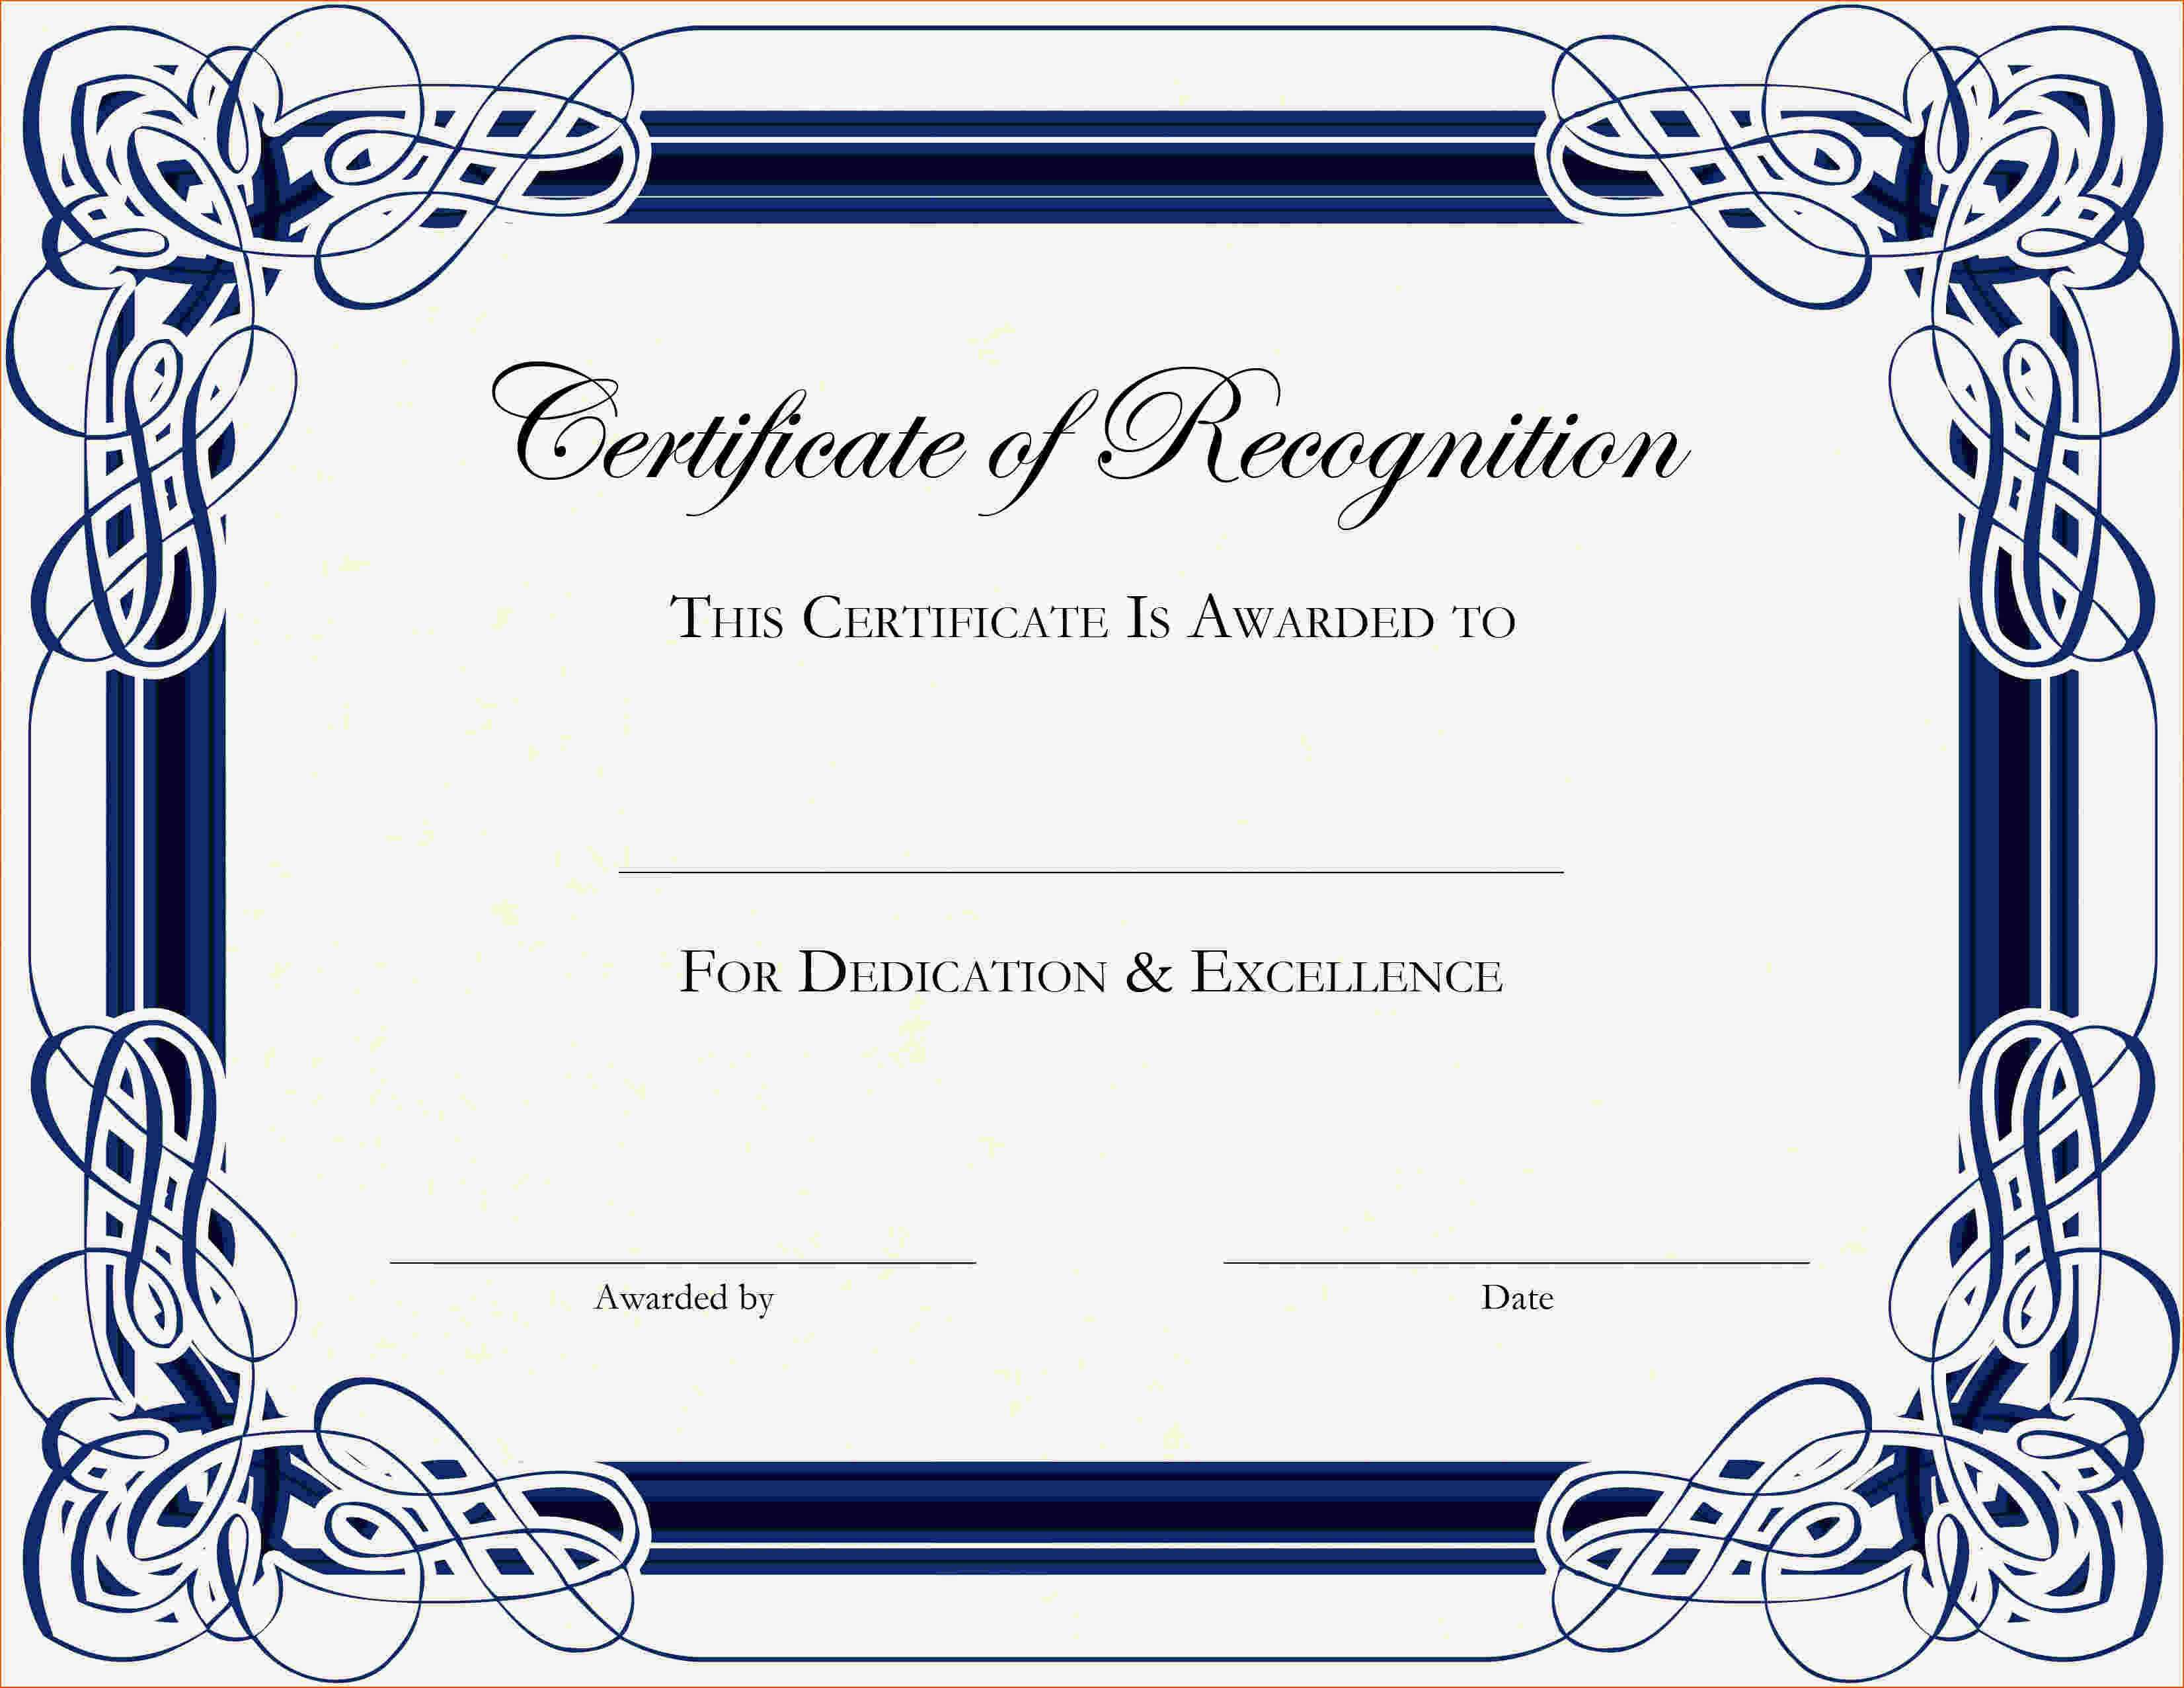 Certificates: Outstanding Certificate Of Appreciation With Certificate Of Appreciation Template Doc